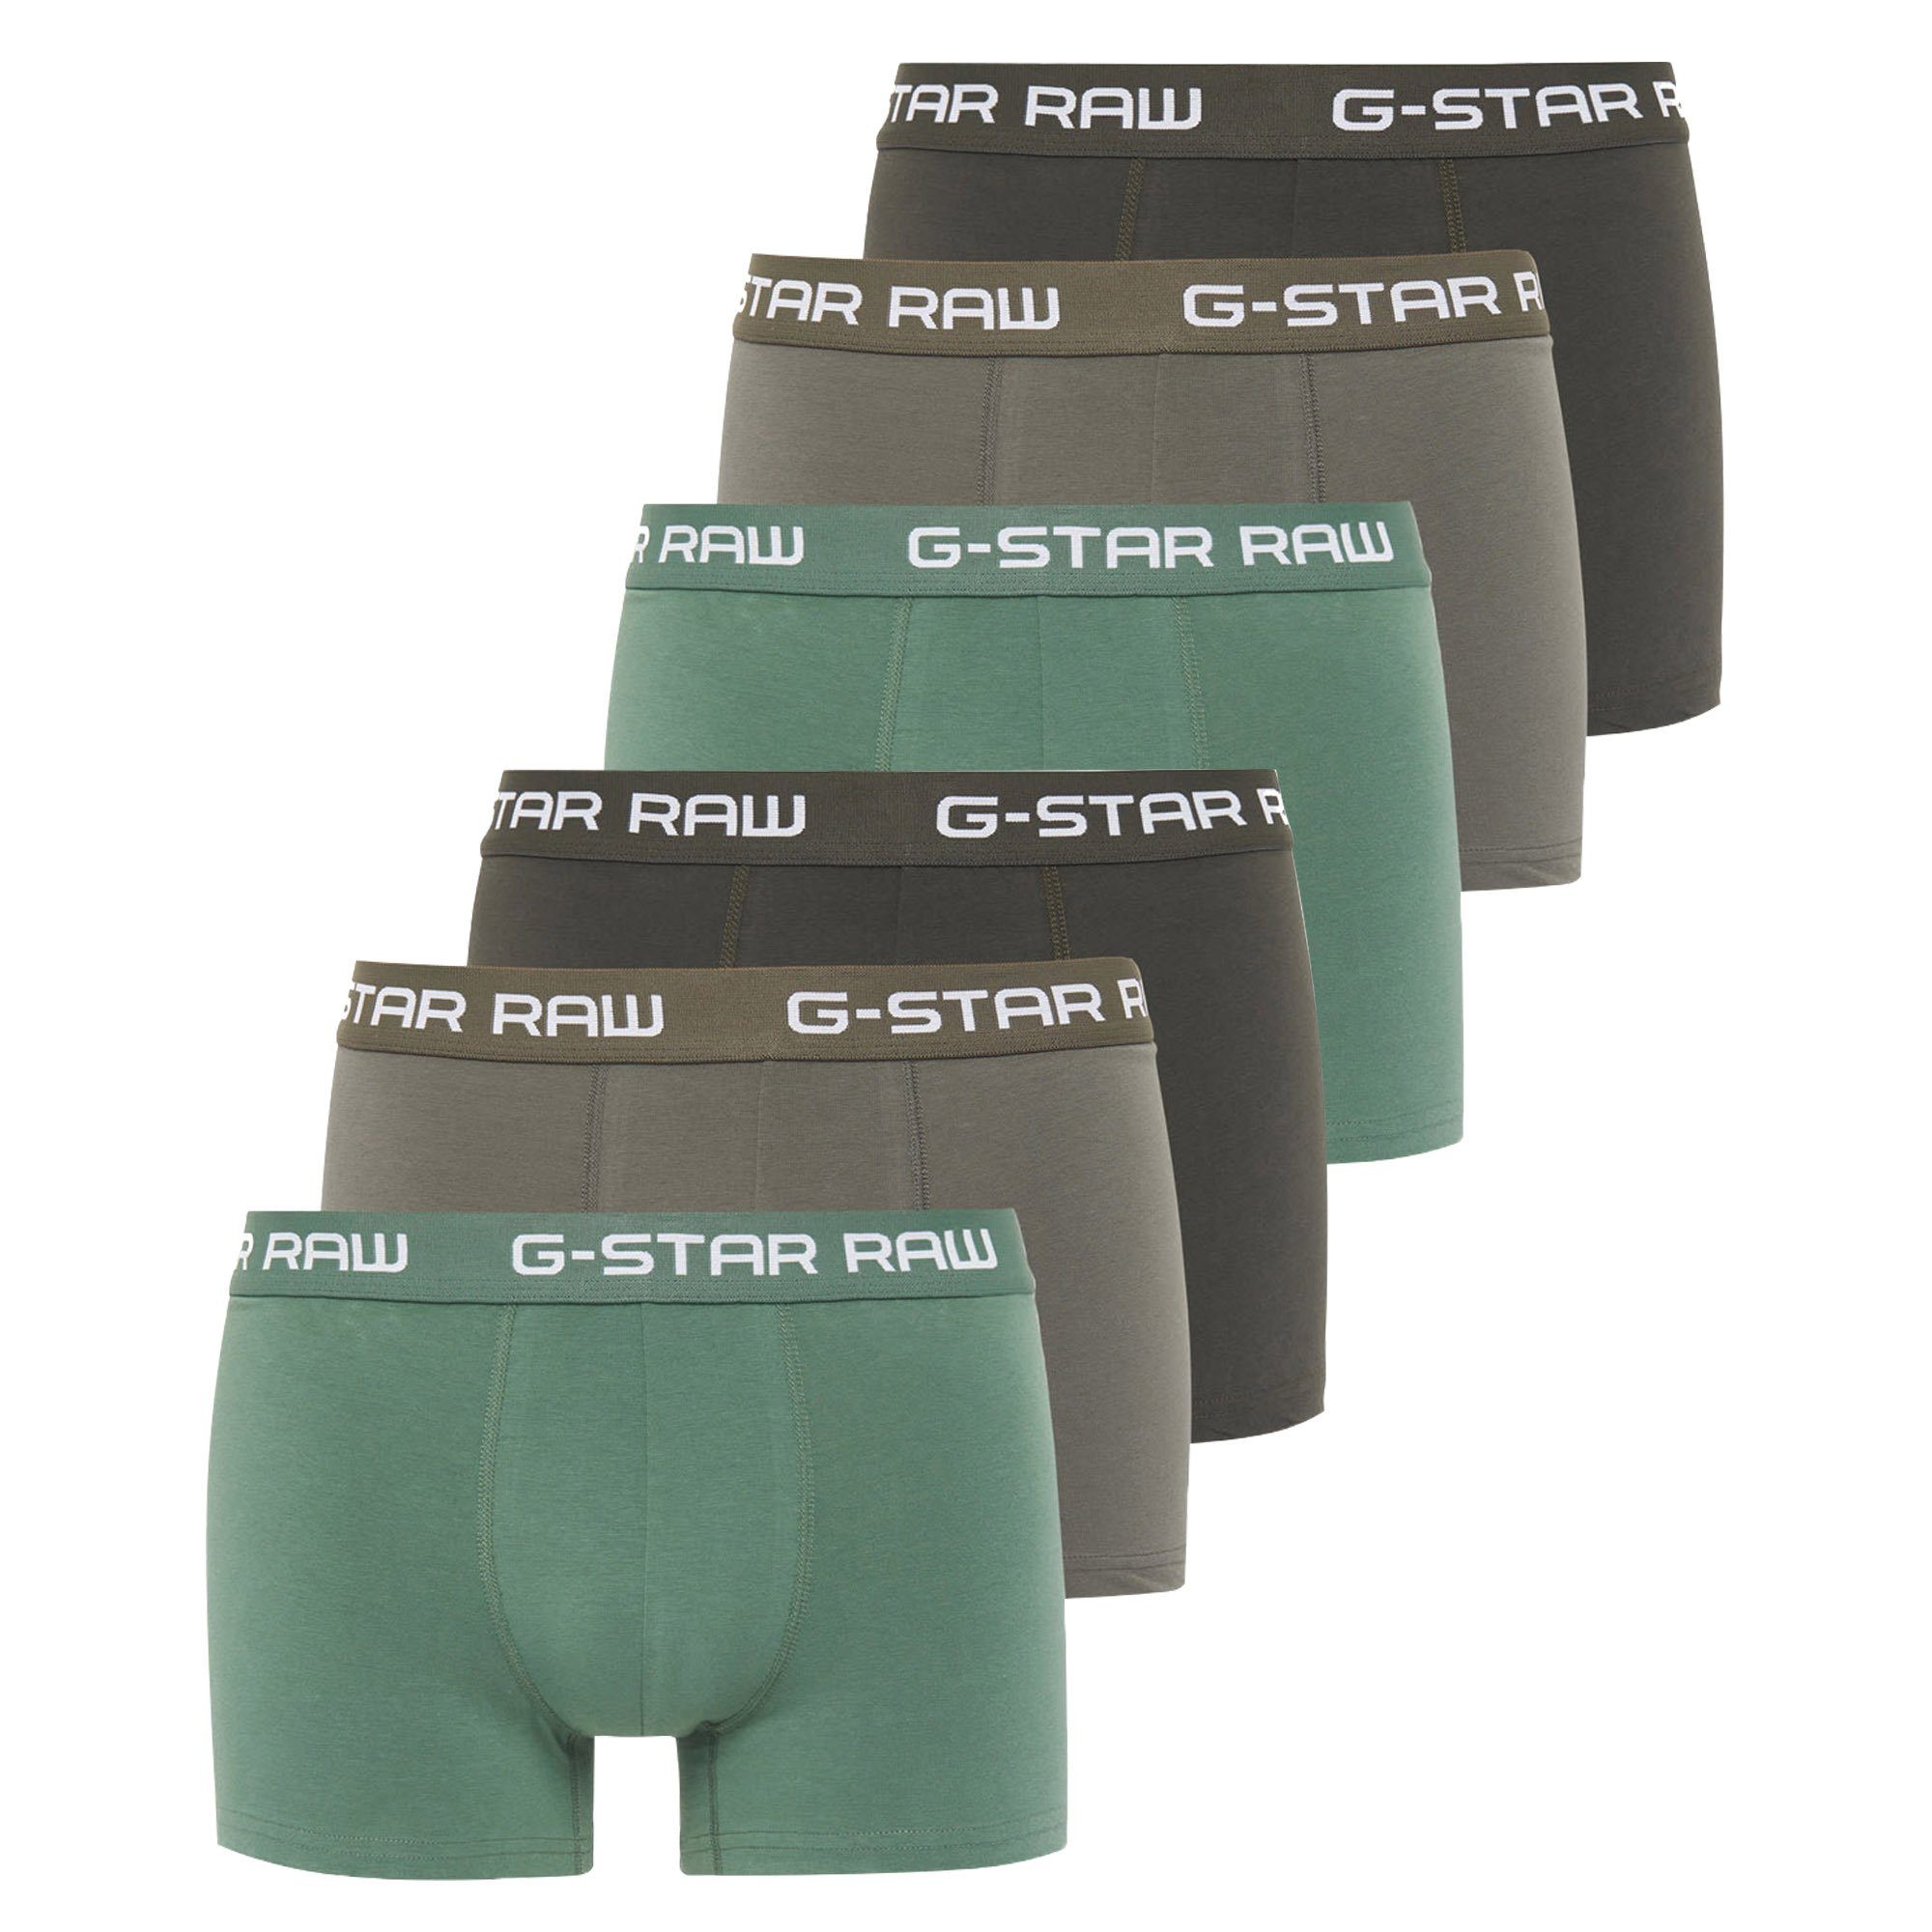 G-Star RAW Boxer Herren Shorts 6er Pack - Classic Trunk, Logobund Grün/Grau